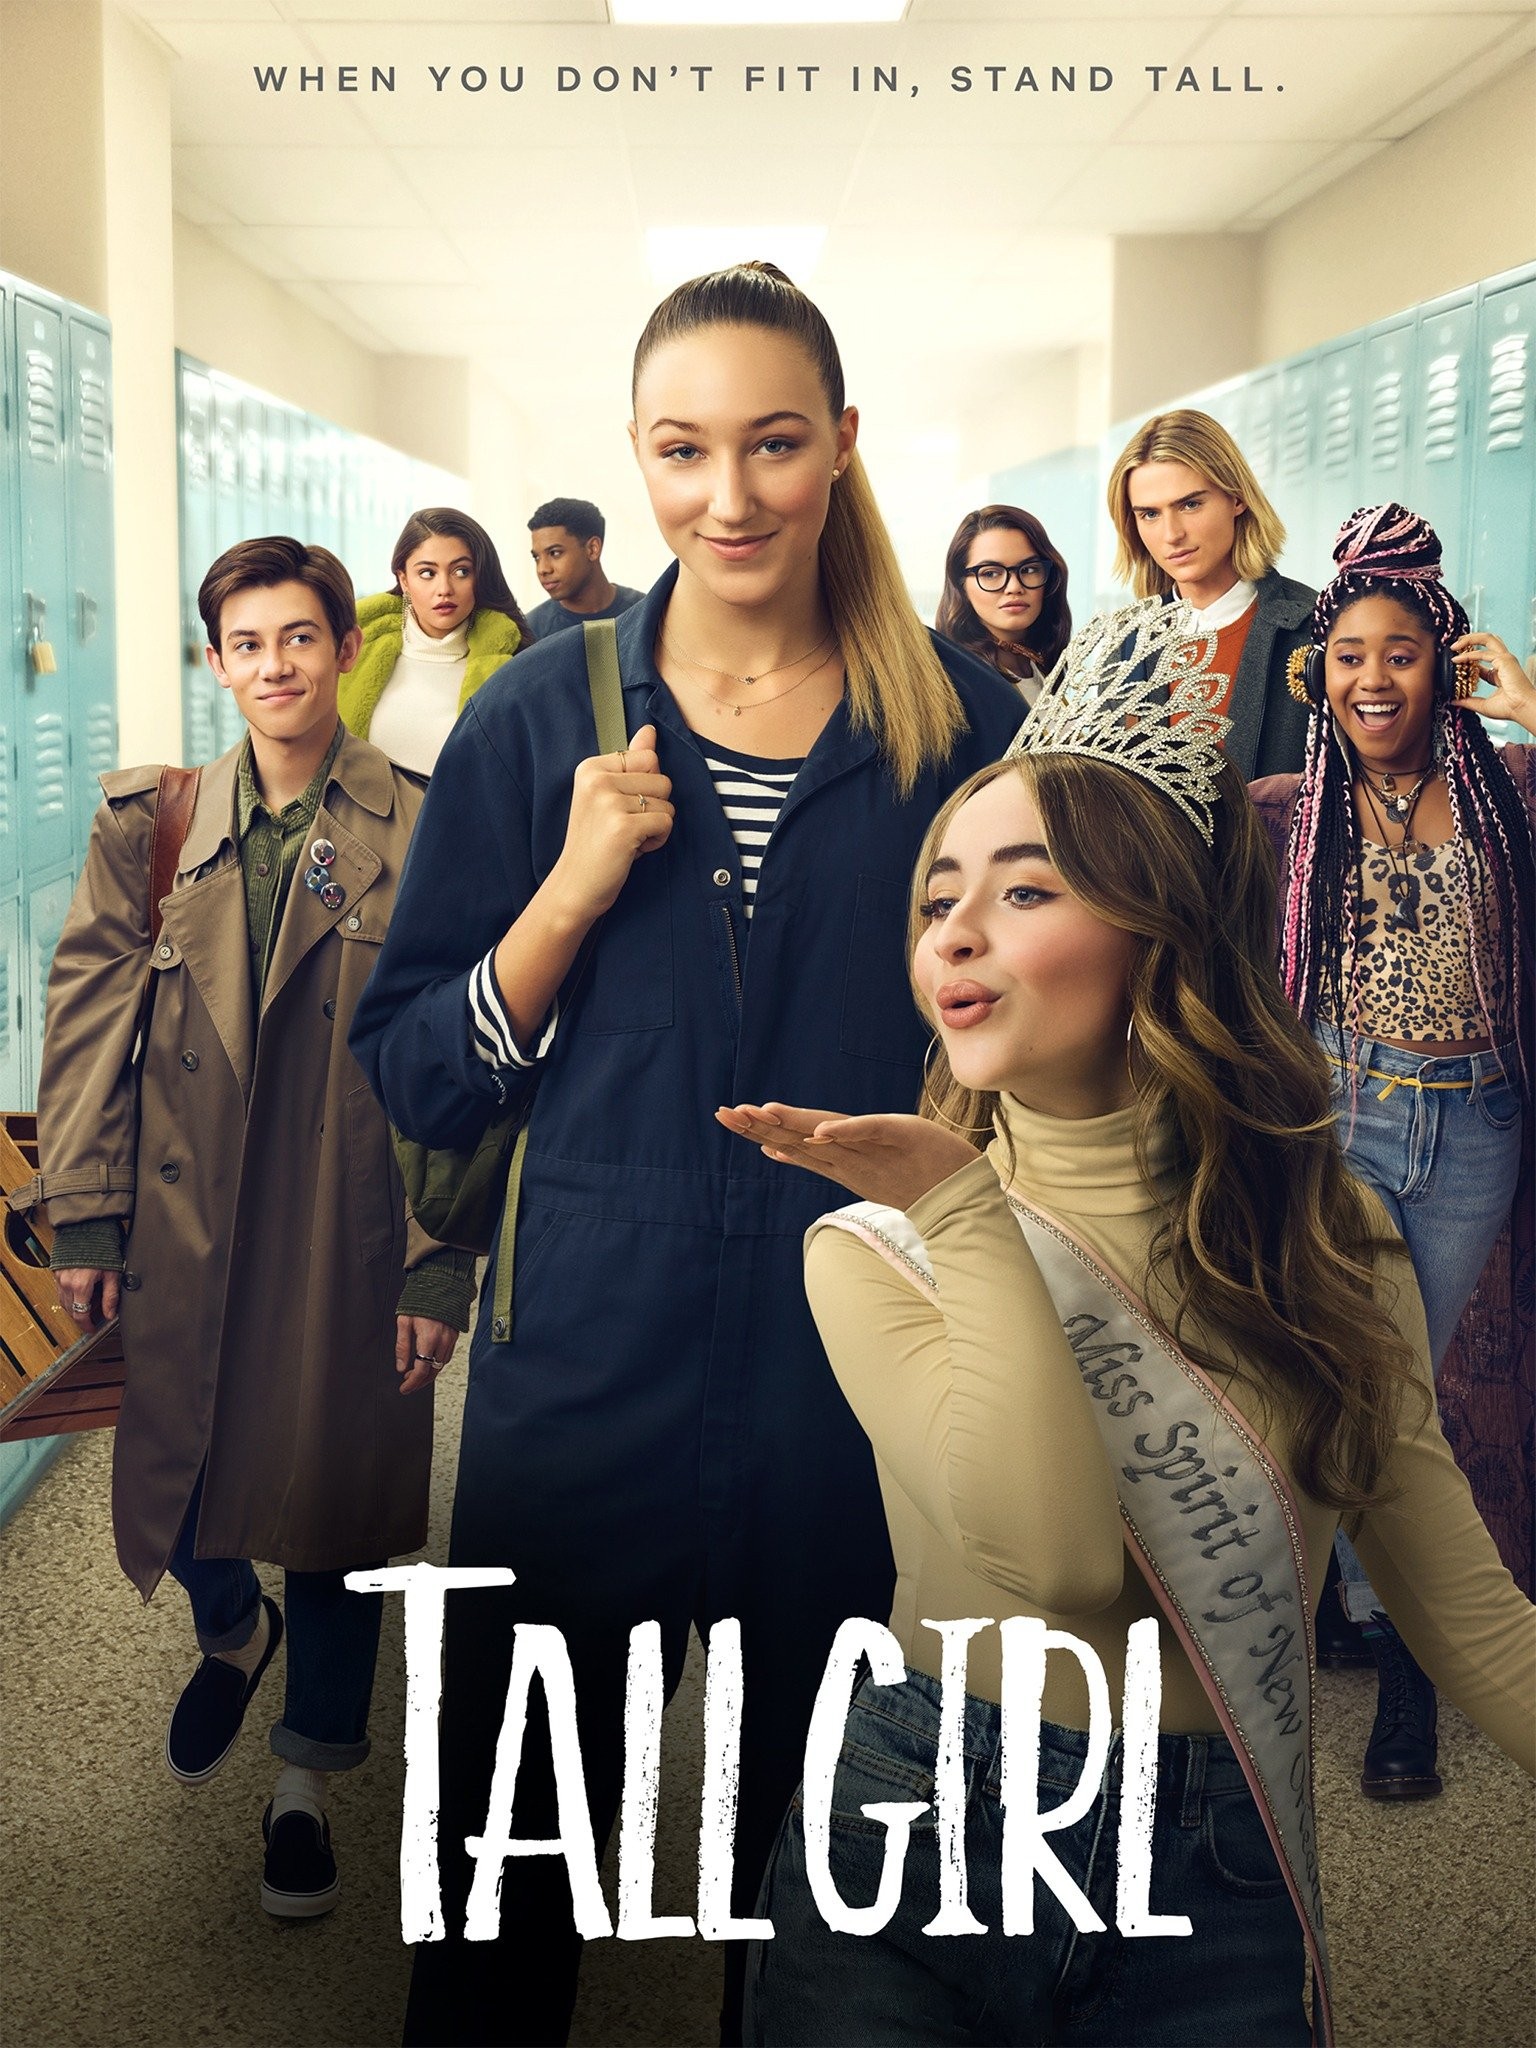 Tall Girl 3 Trailer - Netflix, Ava Michelle - video Dailymotion